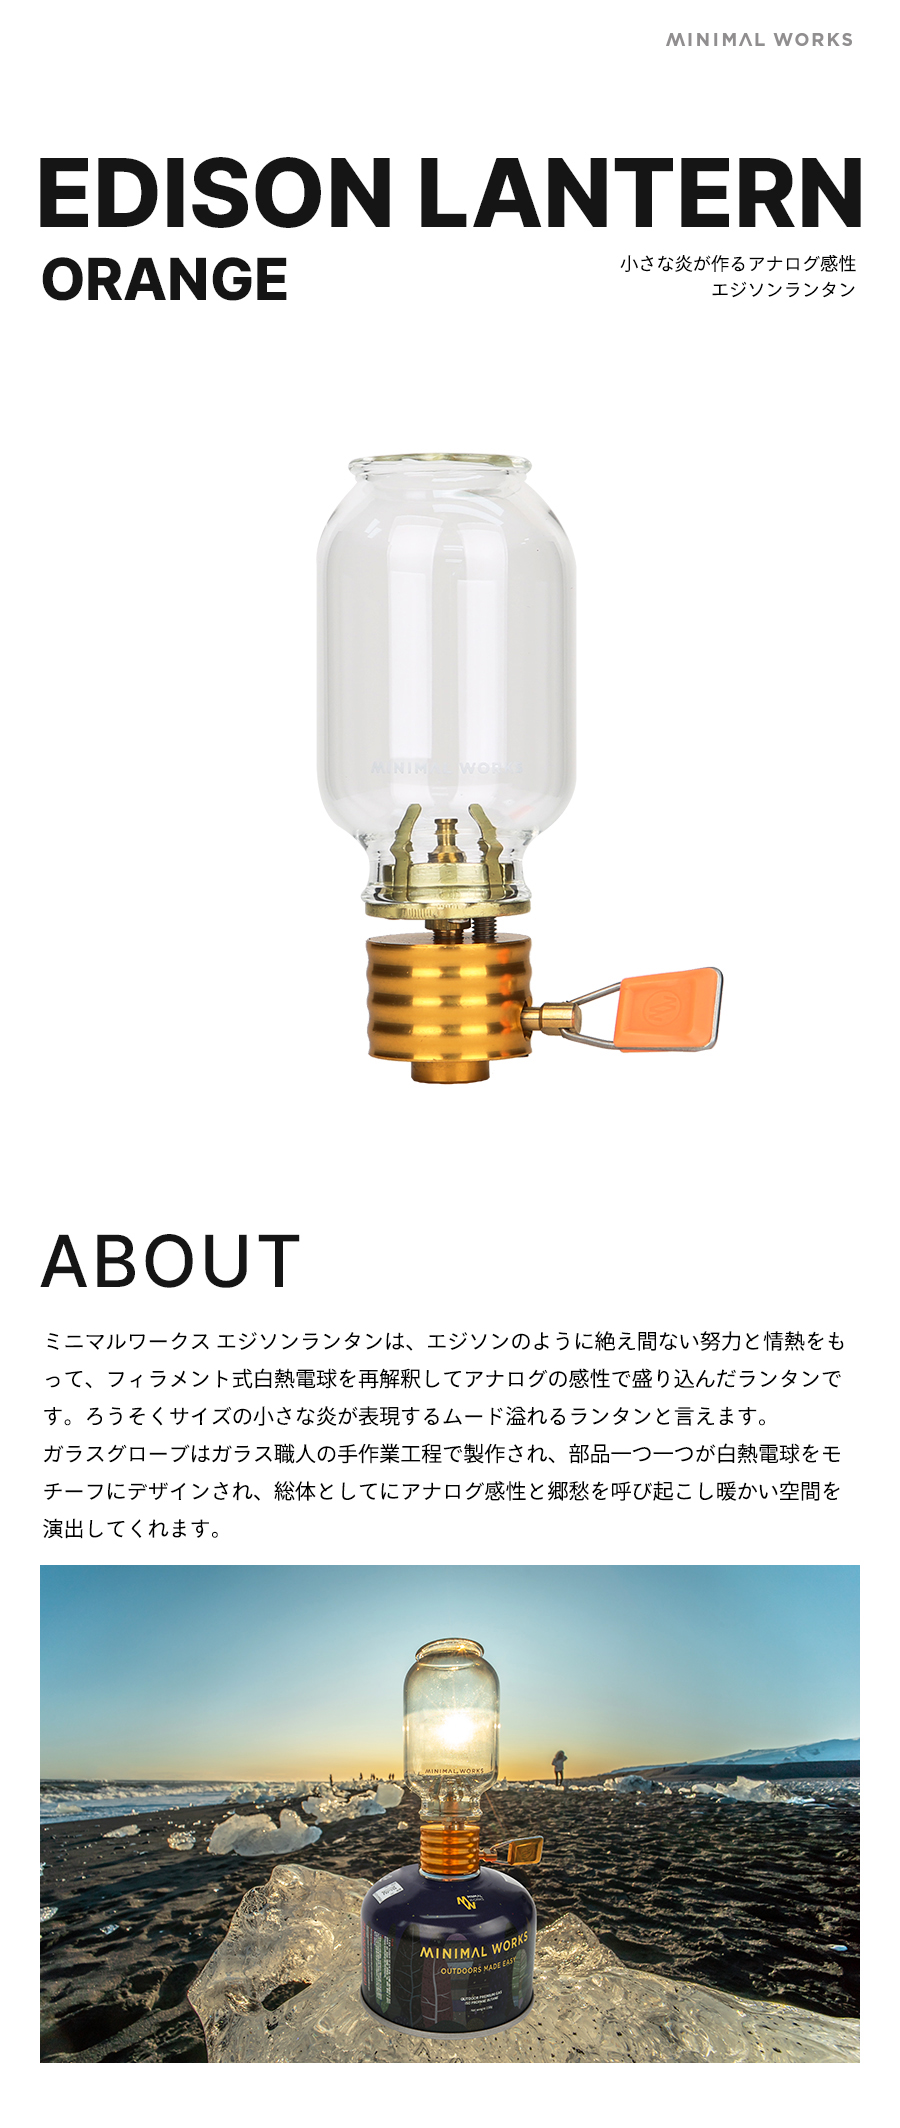 MINIMAL WORKS (ミニマルワークス)Edison Lantern エジソン ランタン 